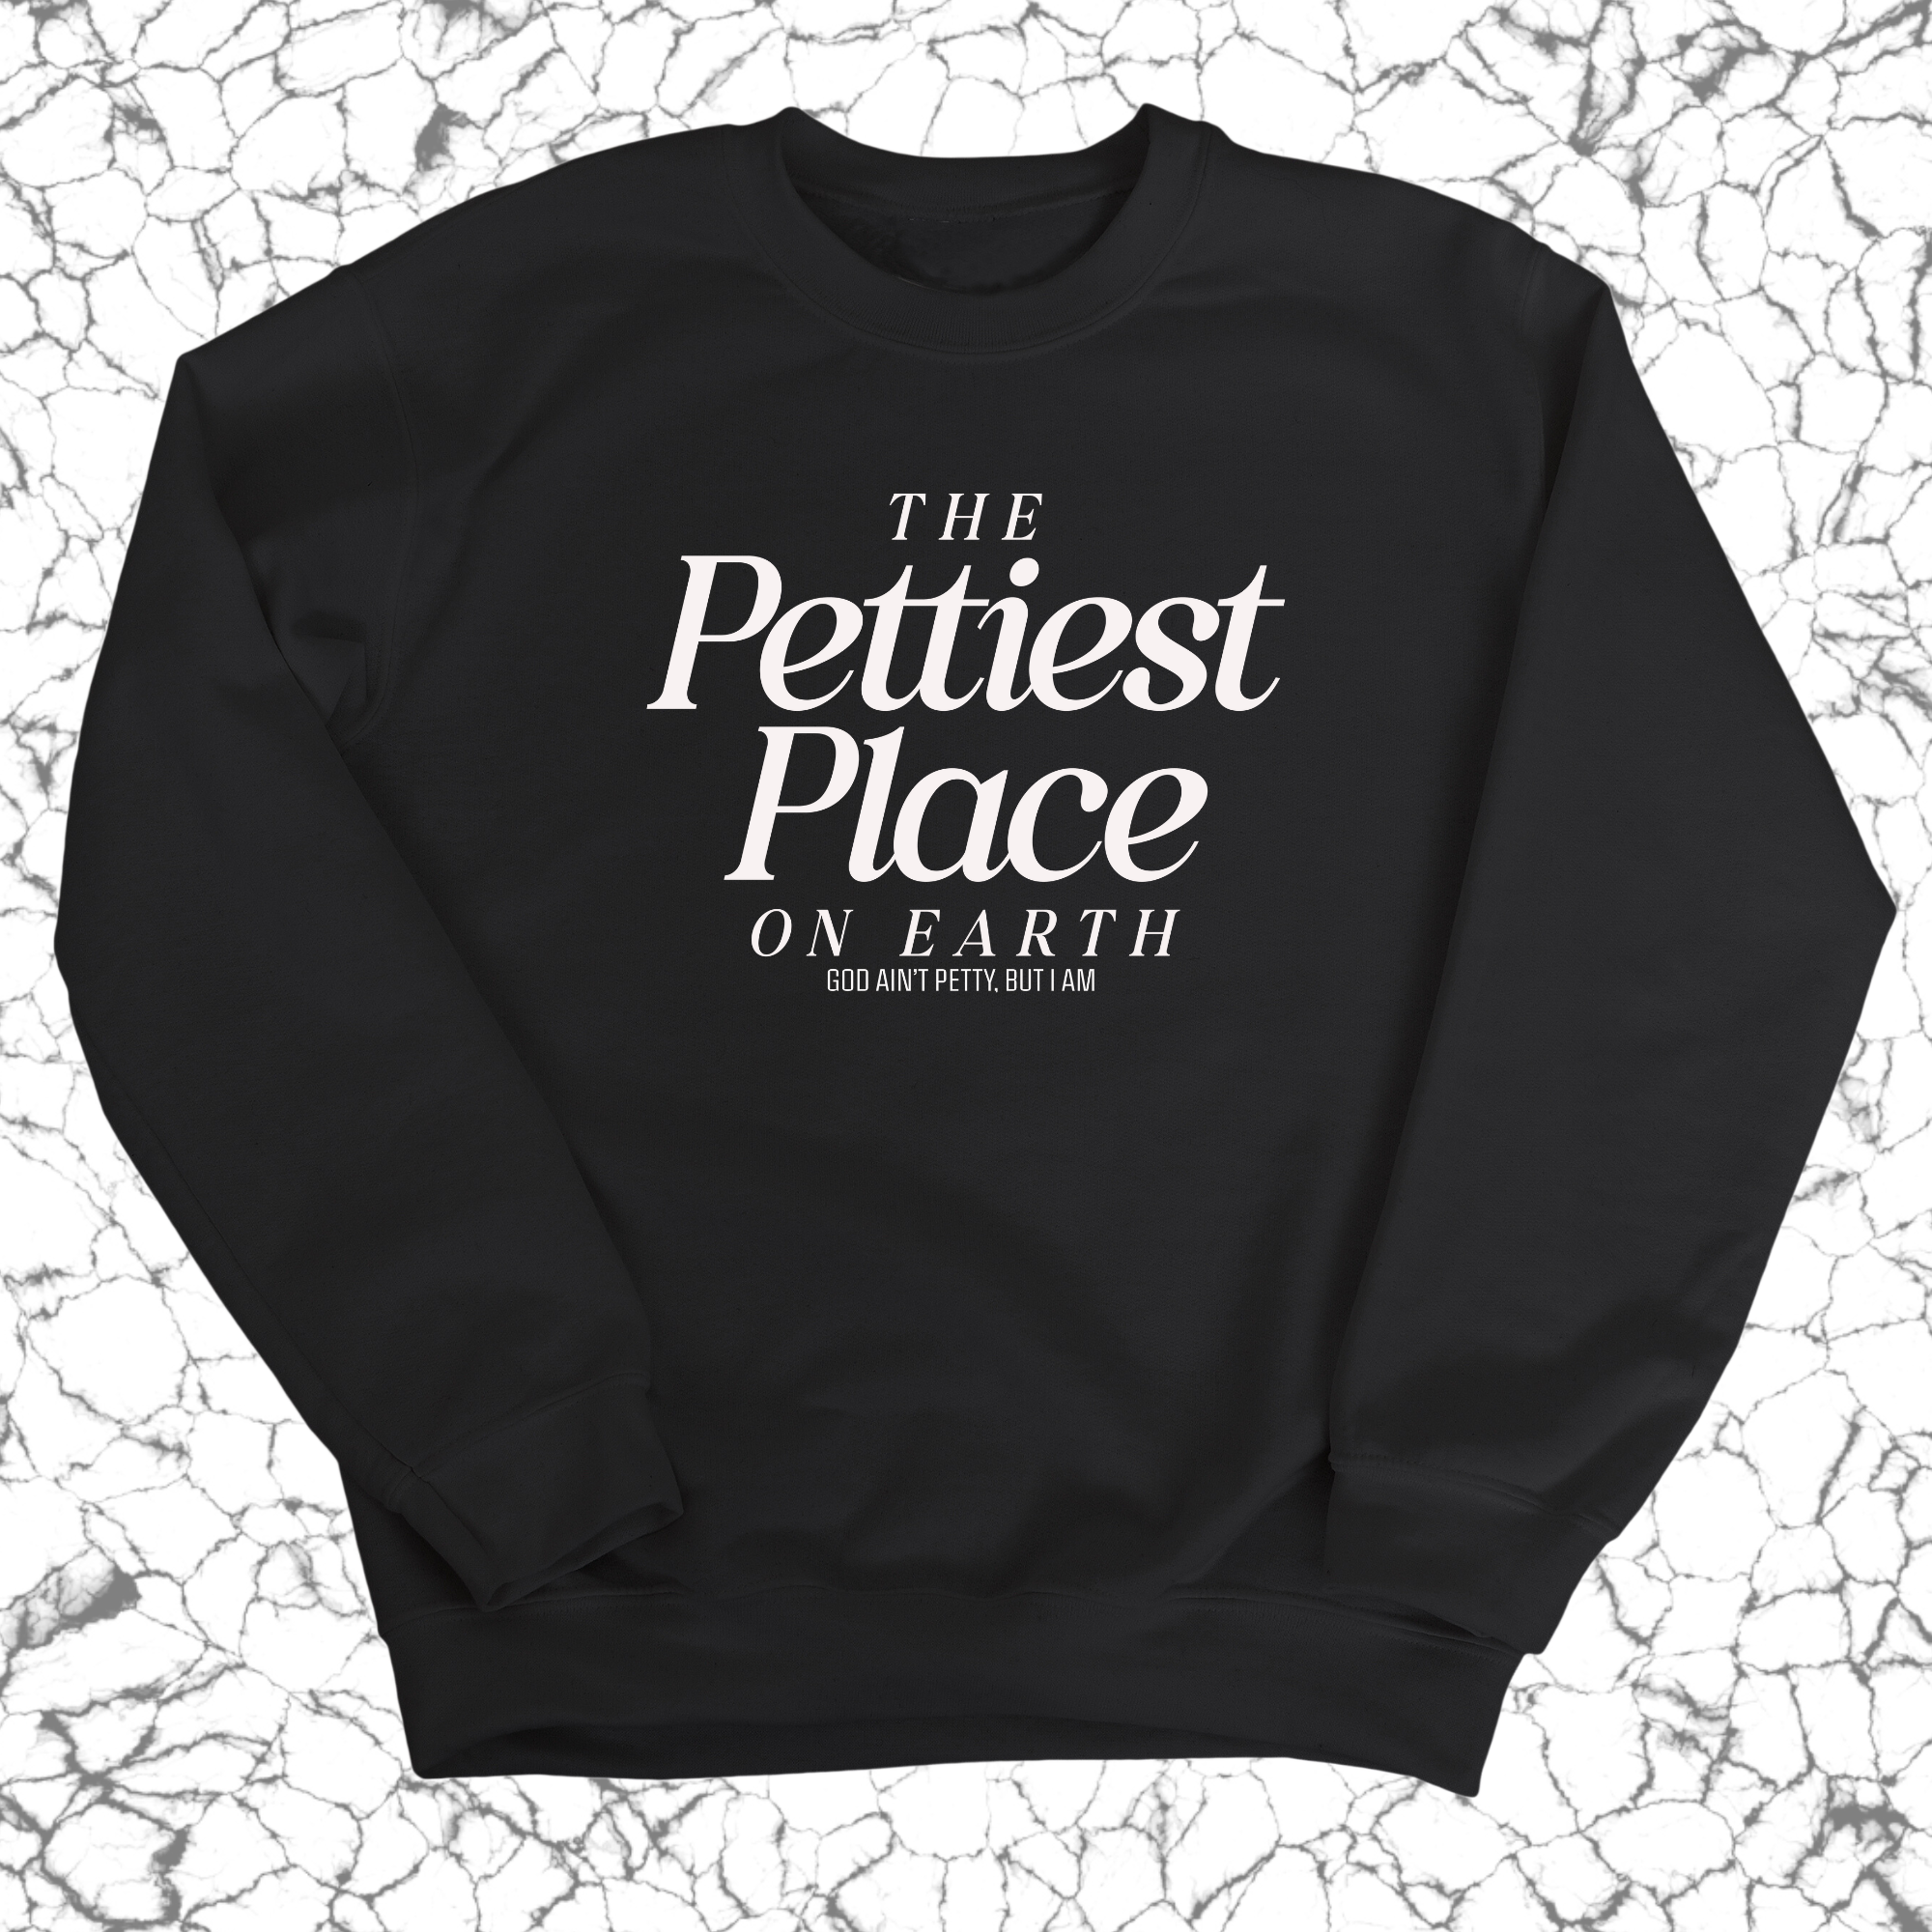 The Pettiest Place on Earth Unisex Sweatshirt-Sweatshirt-The Original God Ain't Petty But I Am